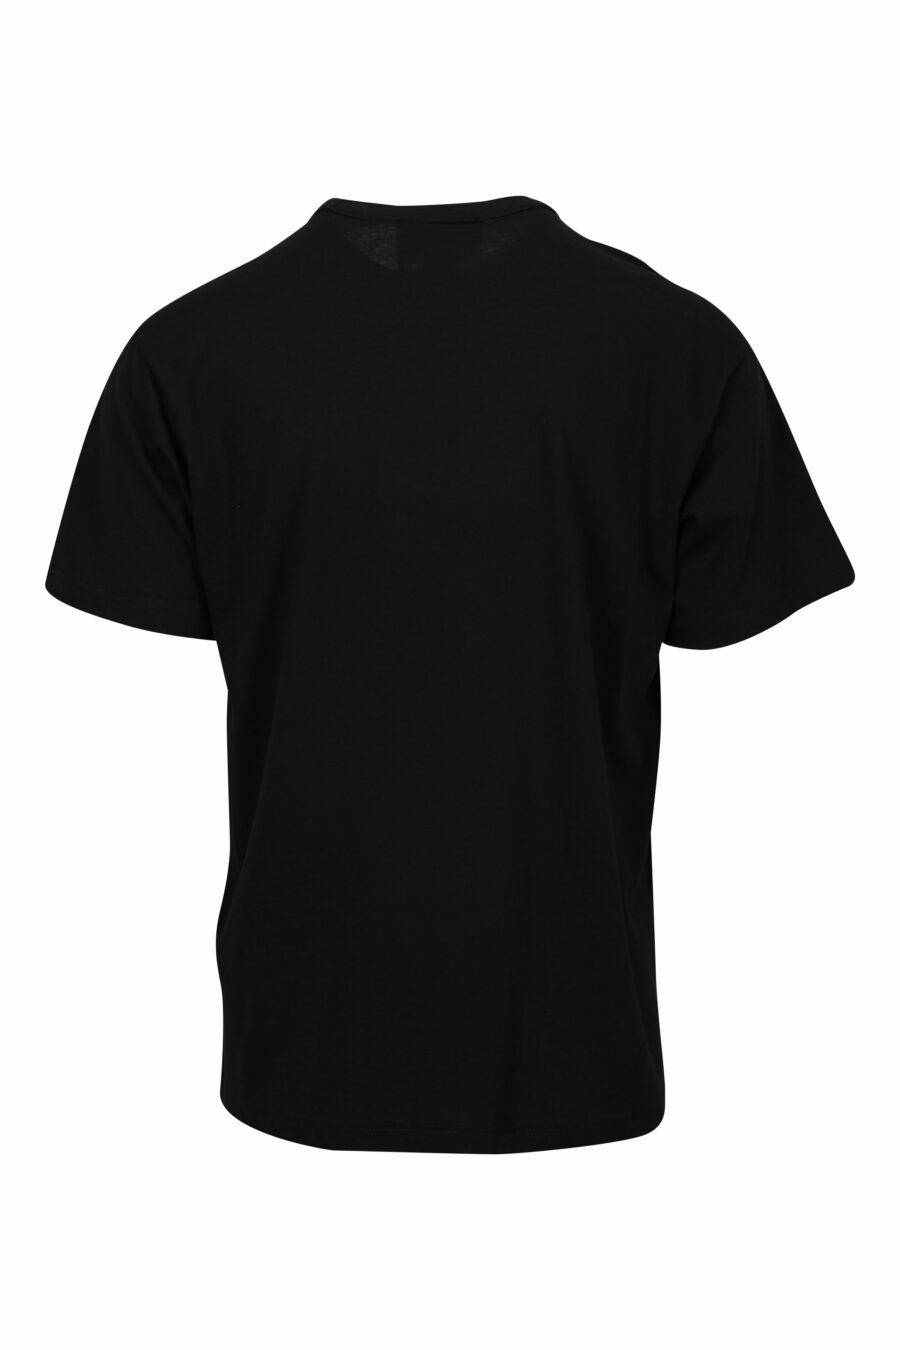 Camiseta negra con minilogo etiqueta - 8052019599626 1